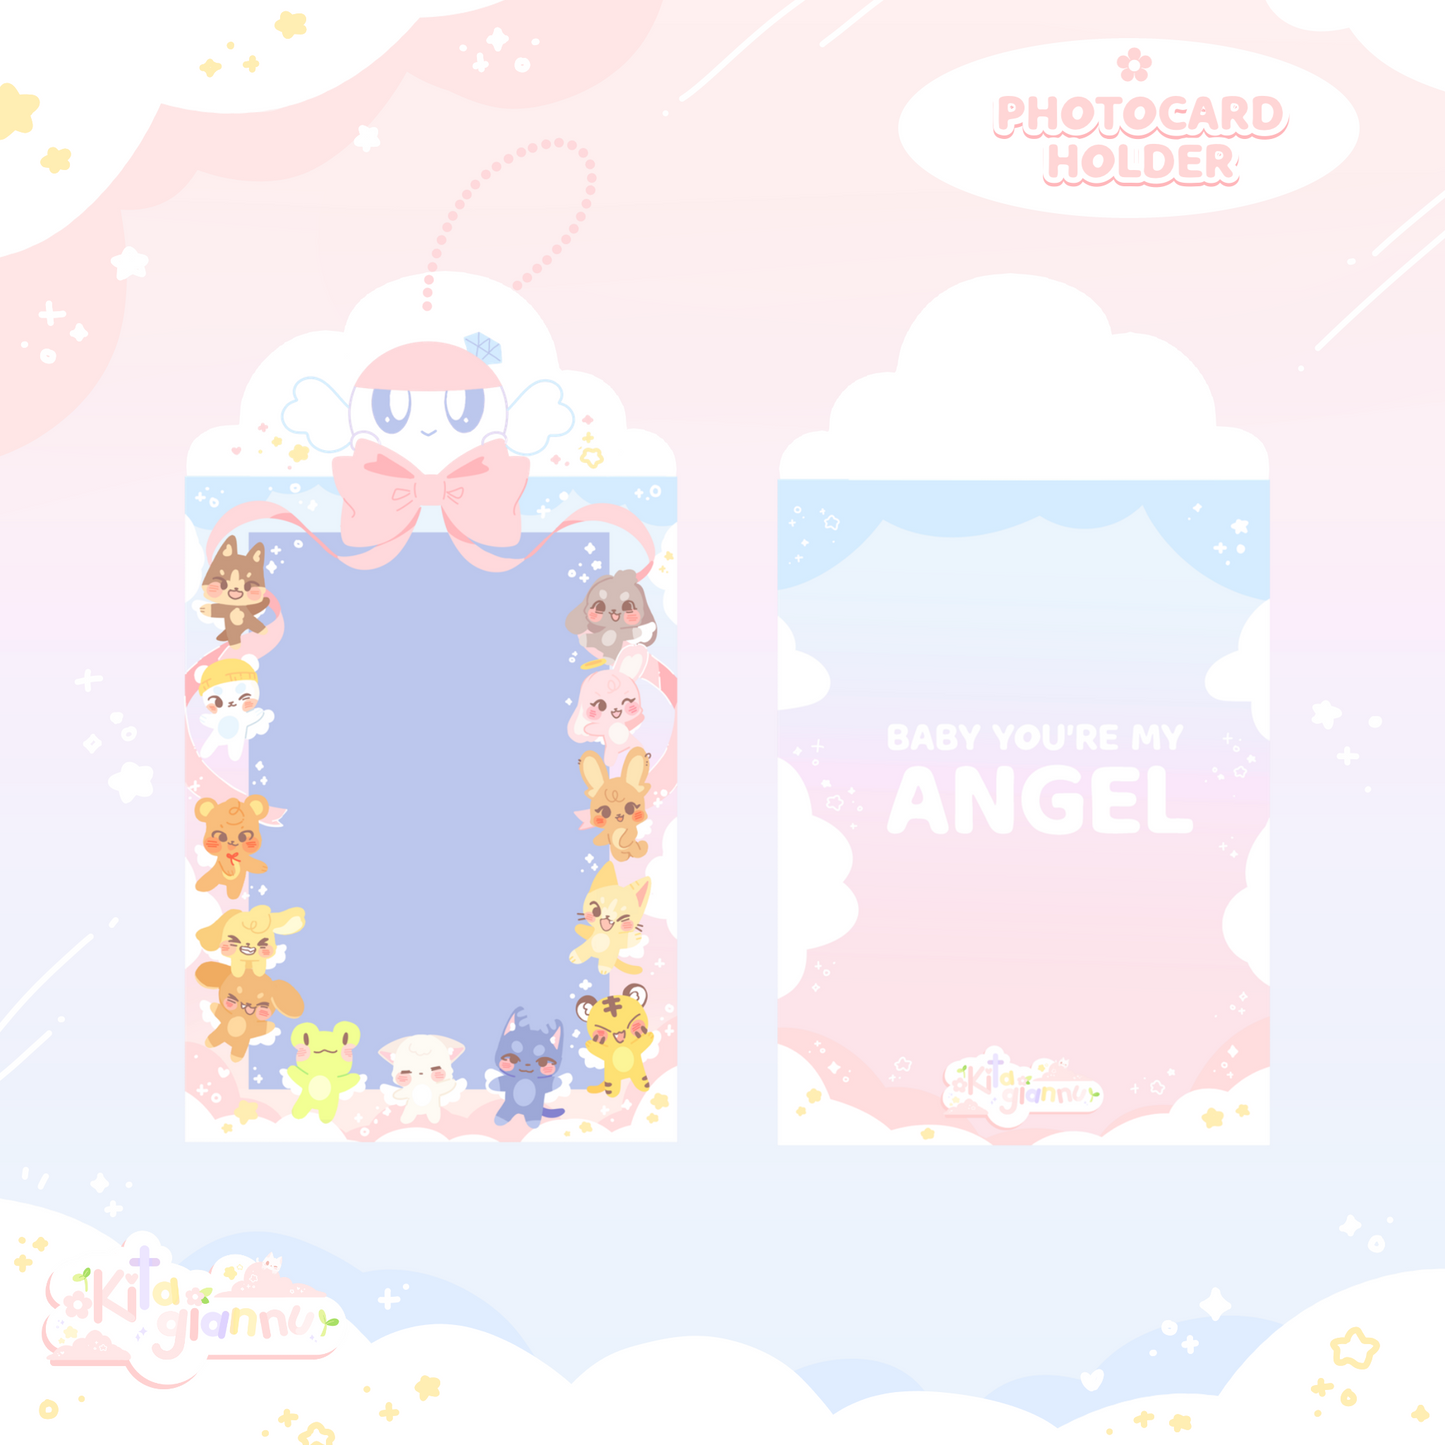 Lil Angels | Photocard Holder [PREORDER]